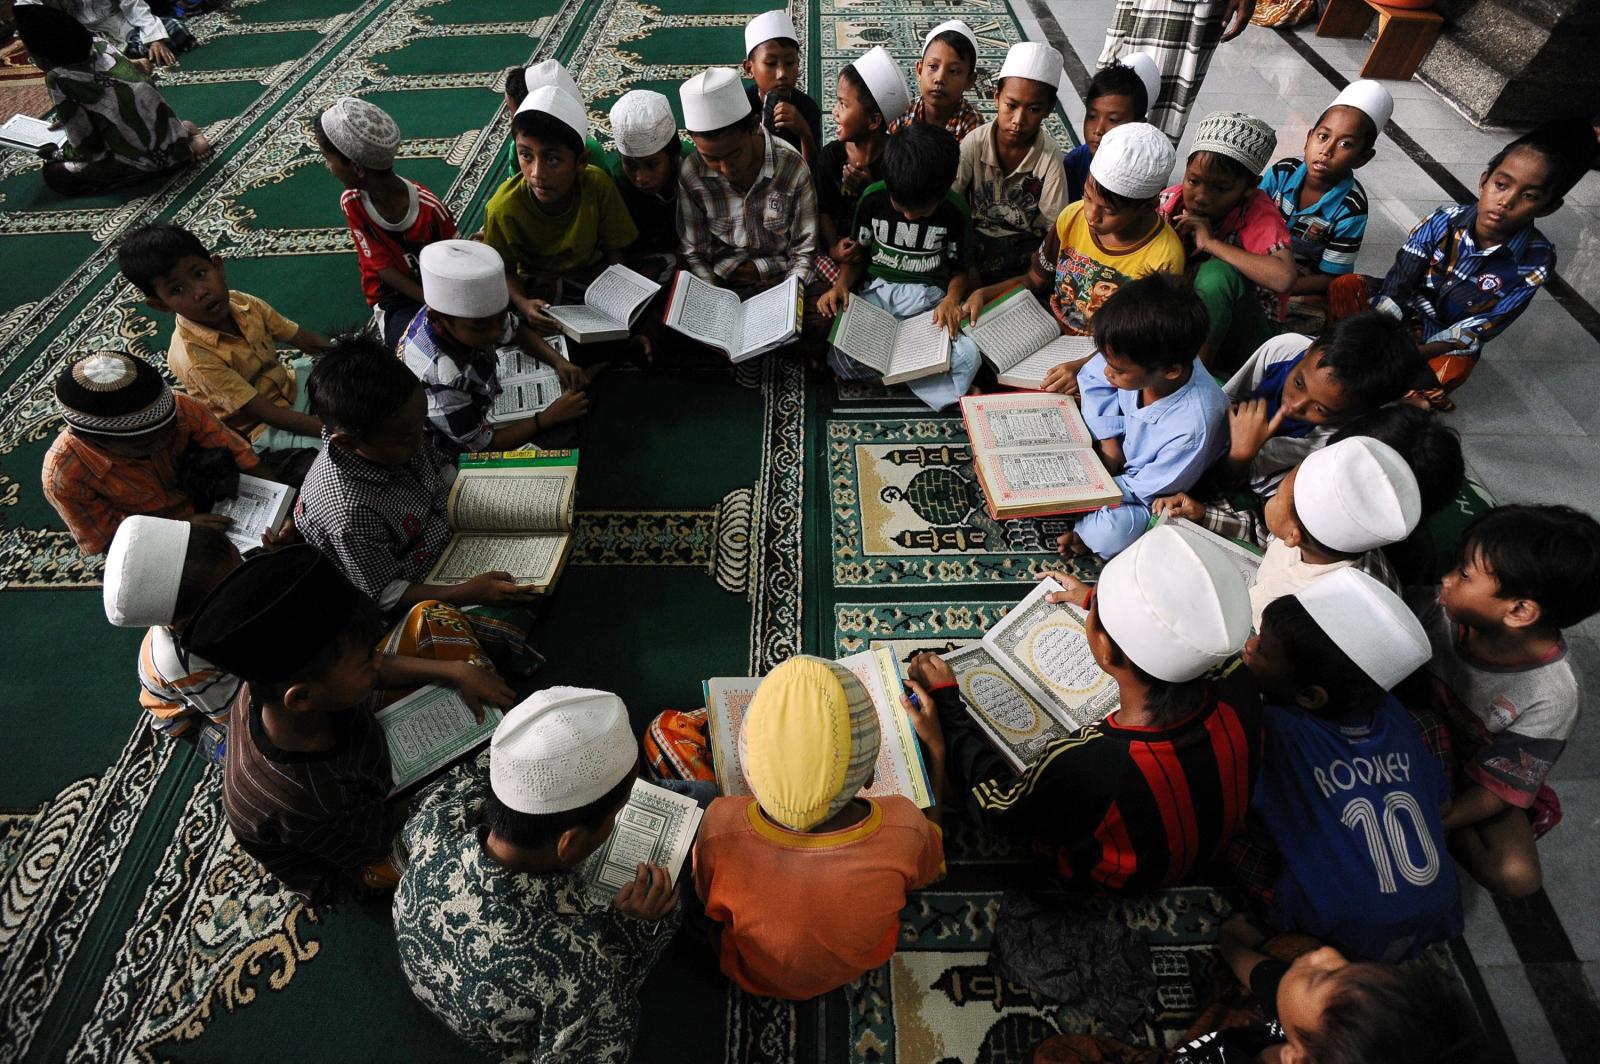 Muslims reading the Al-Quran. Photo from islaminindonesia.com